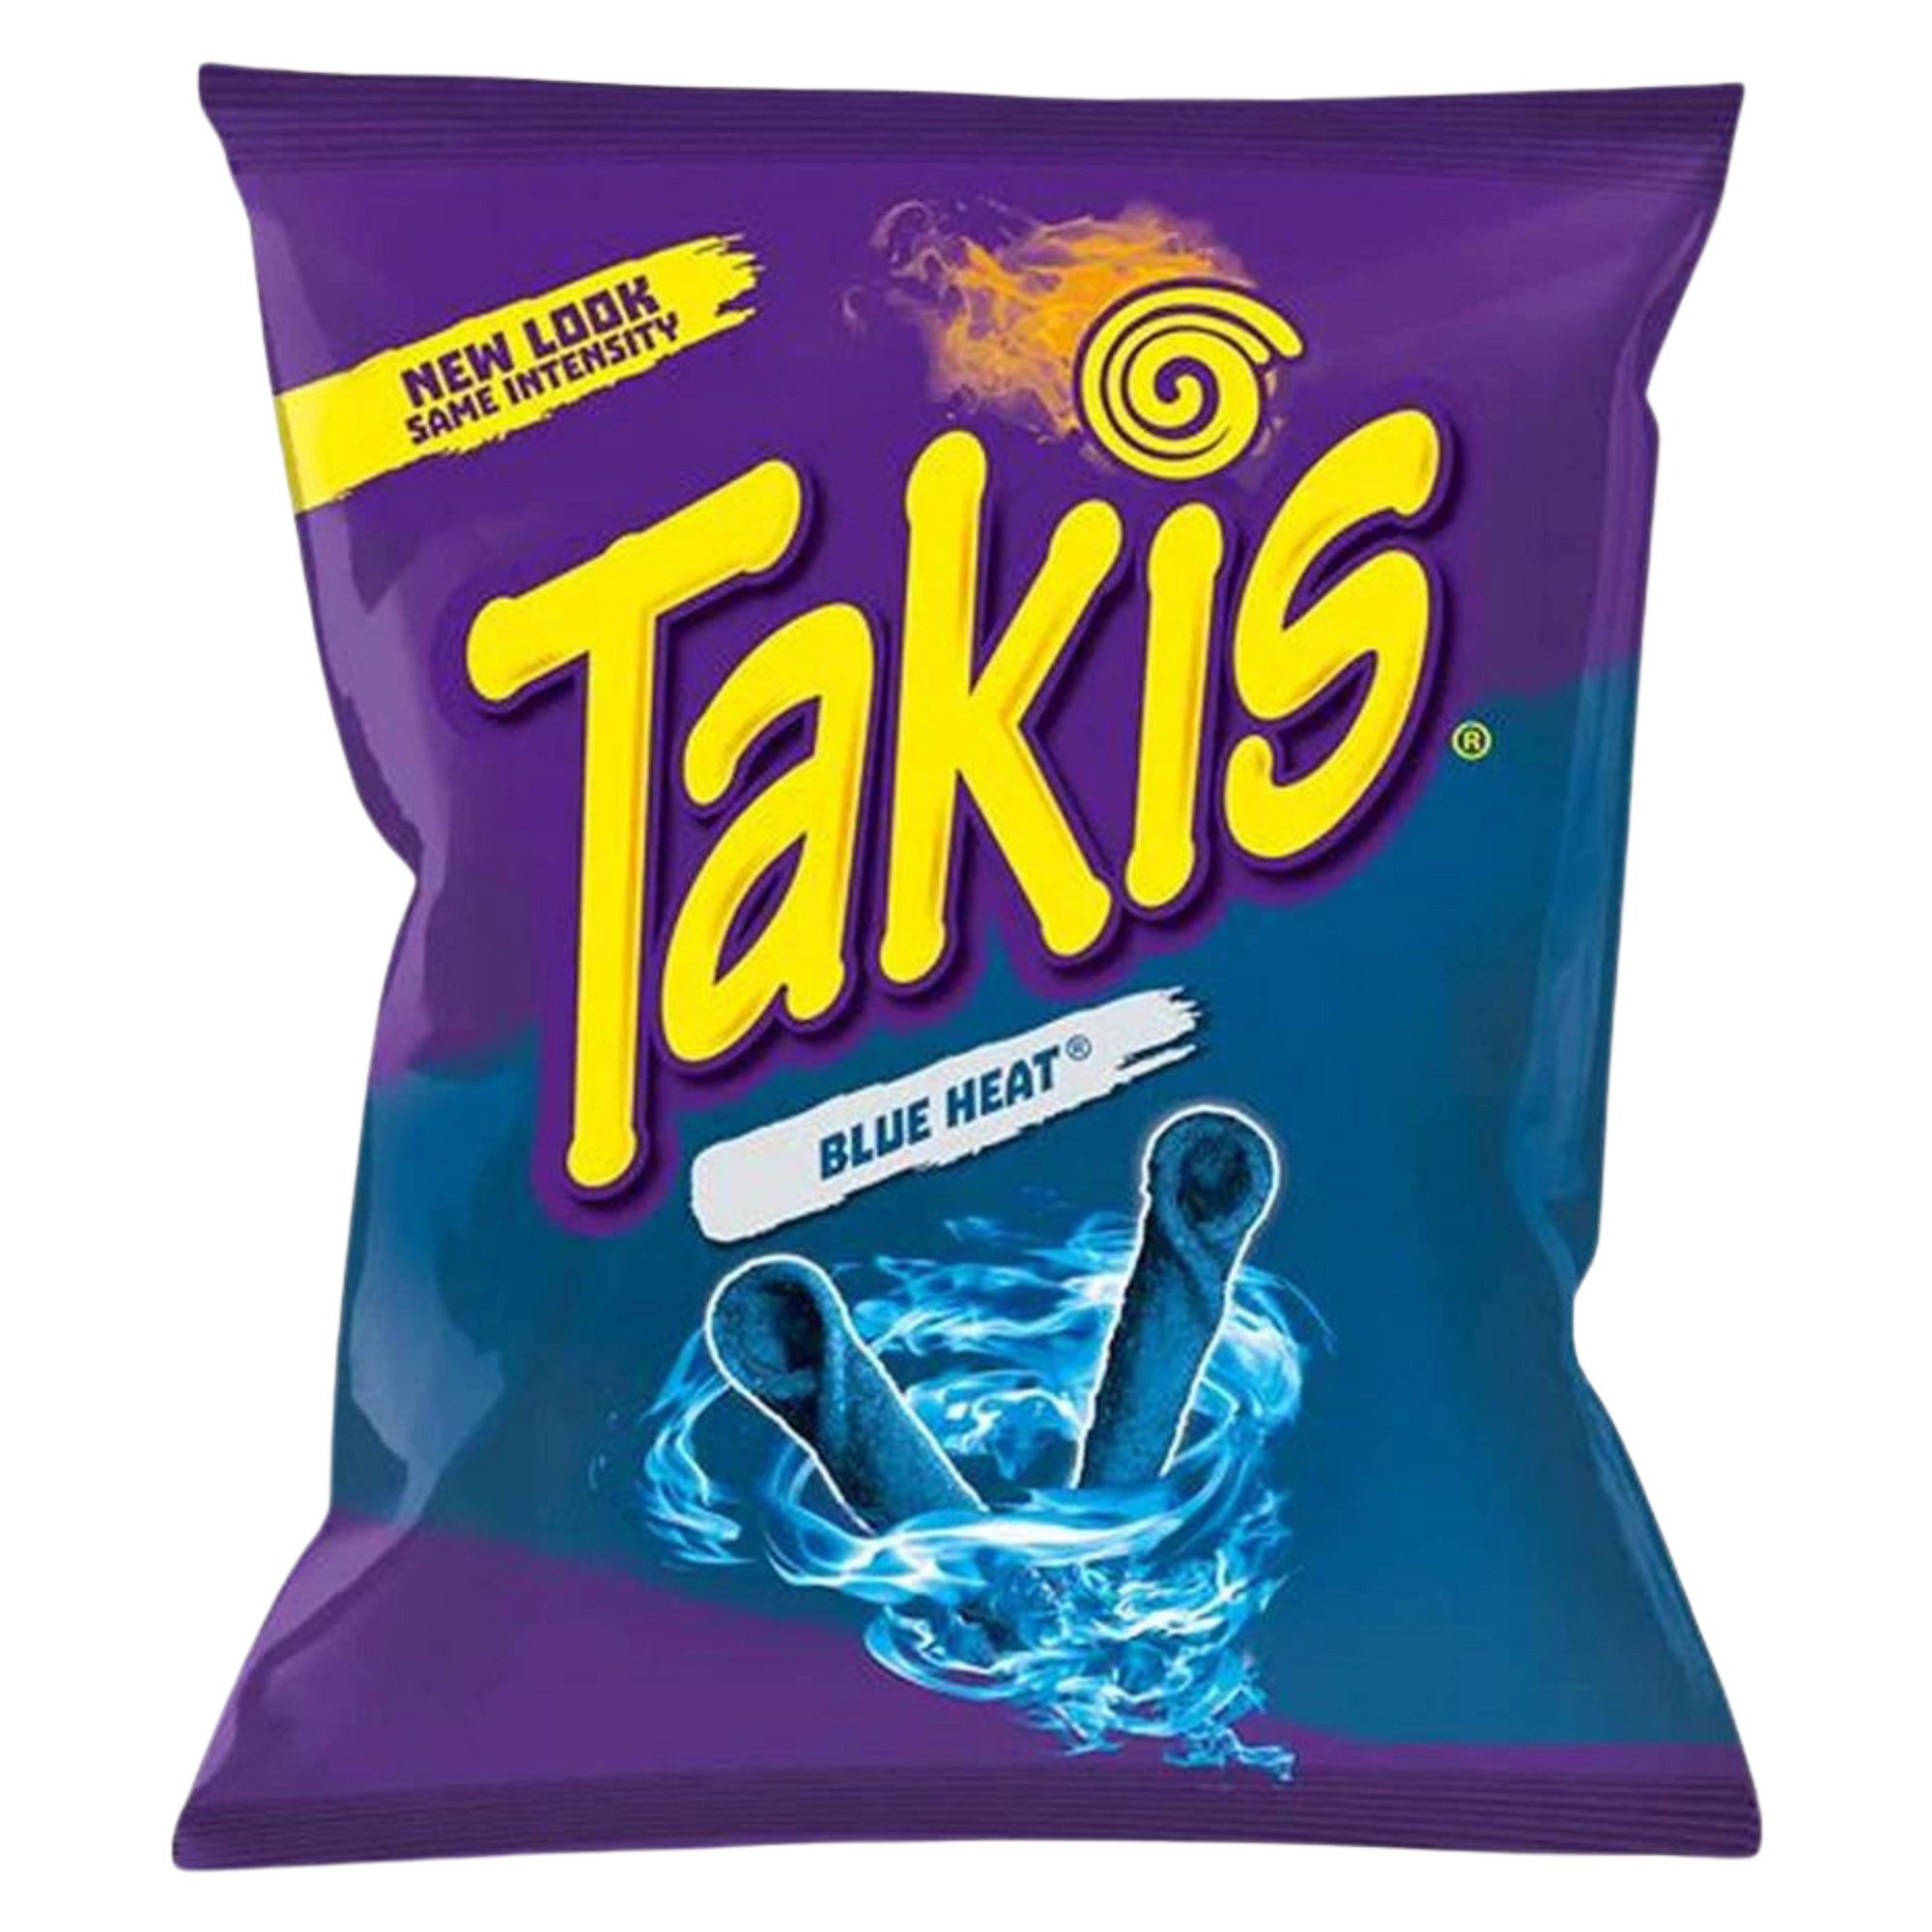 Takis Blue Heat Corn Chips 92.3g - Nammi.net